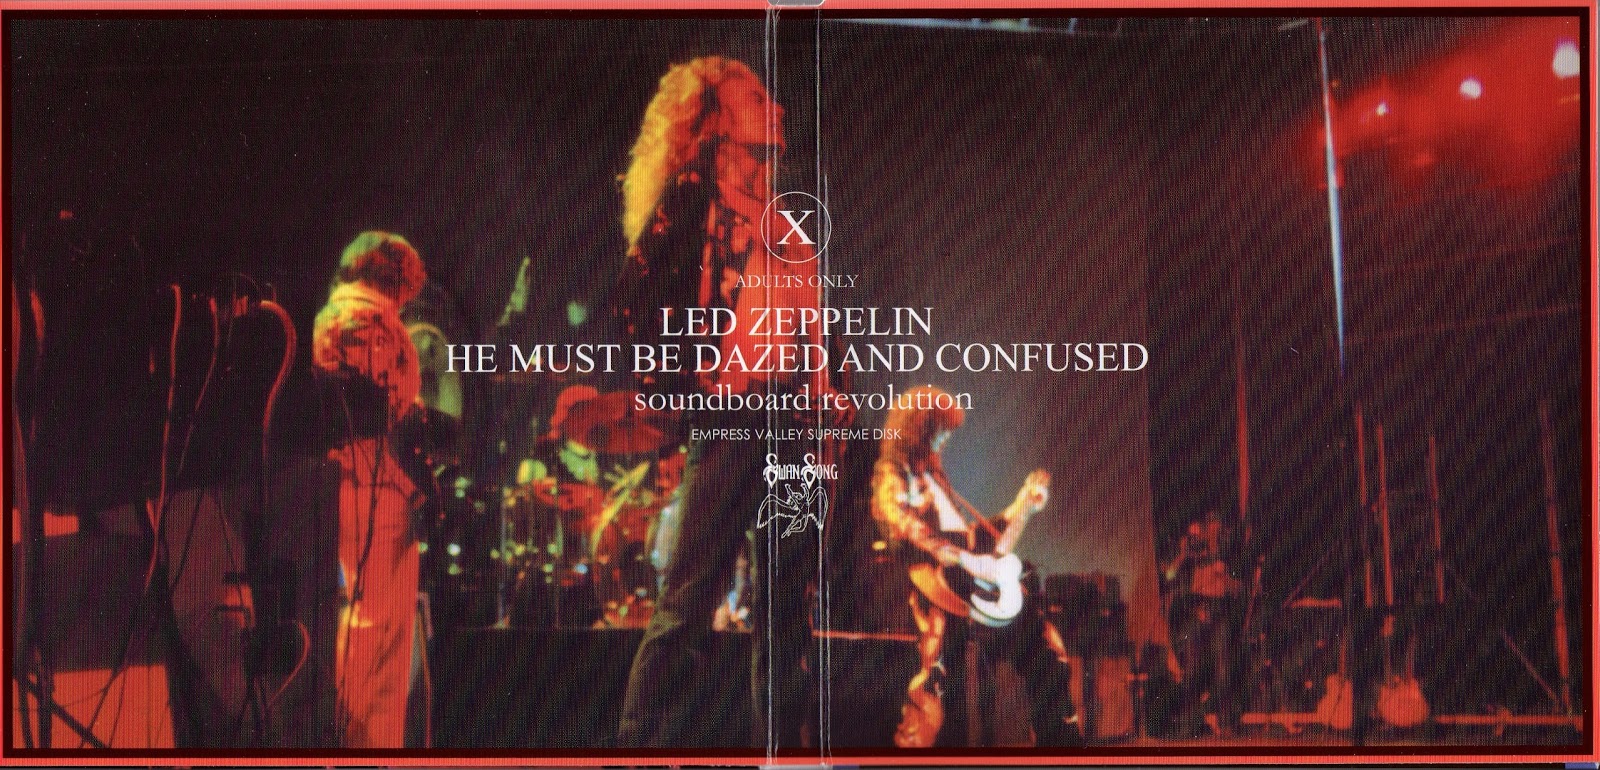 Led Zeppelin - Coda Deluxe Edition 2015 FLAC